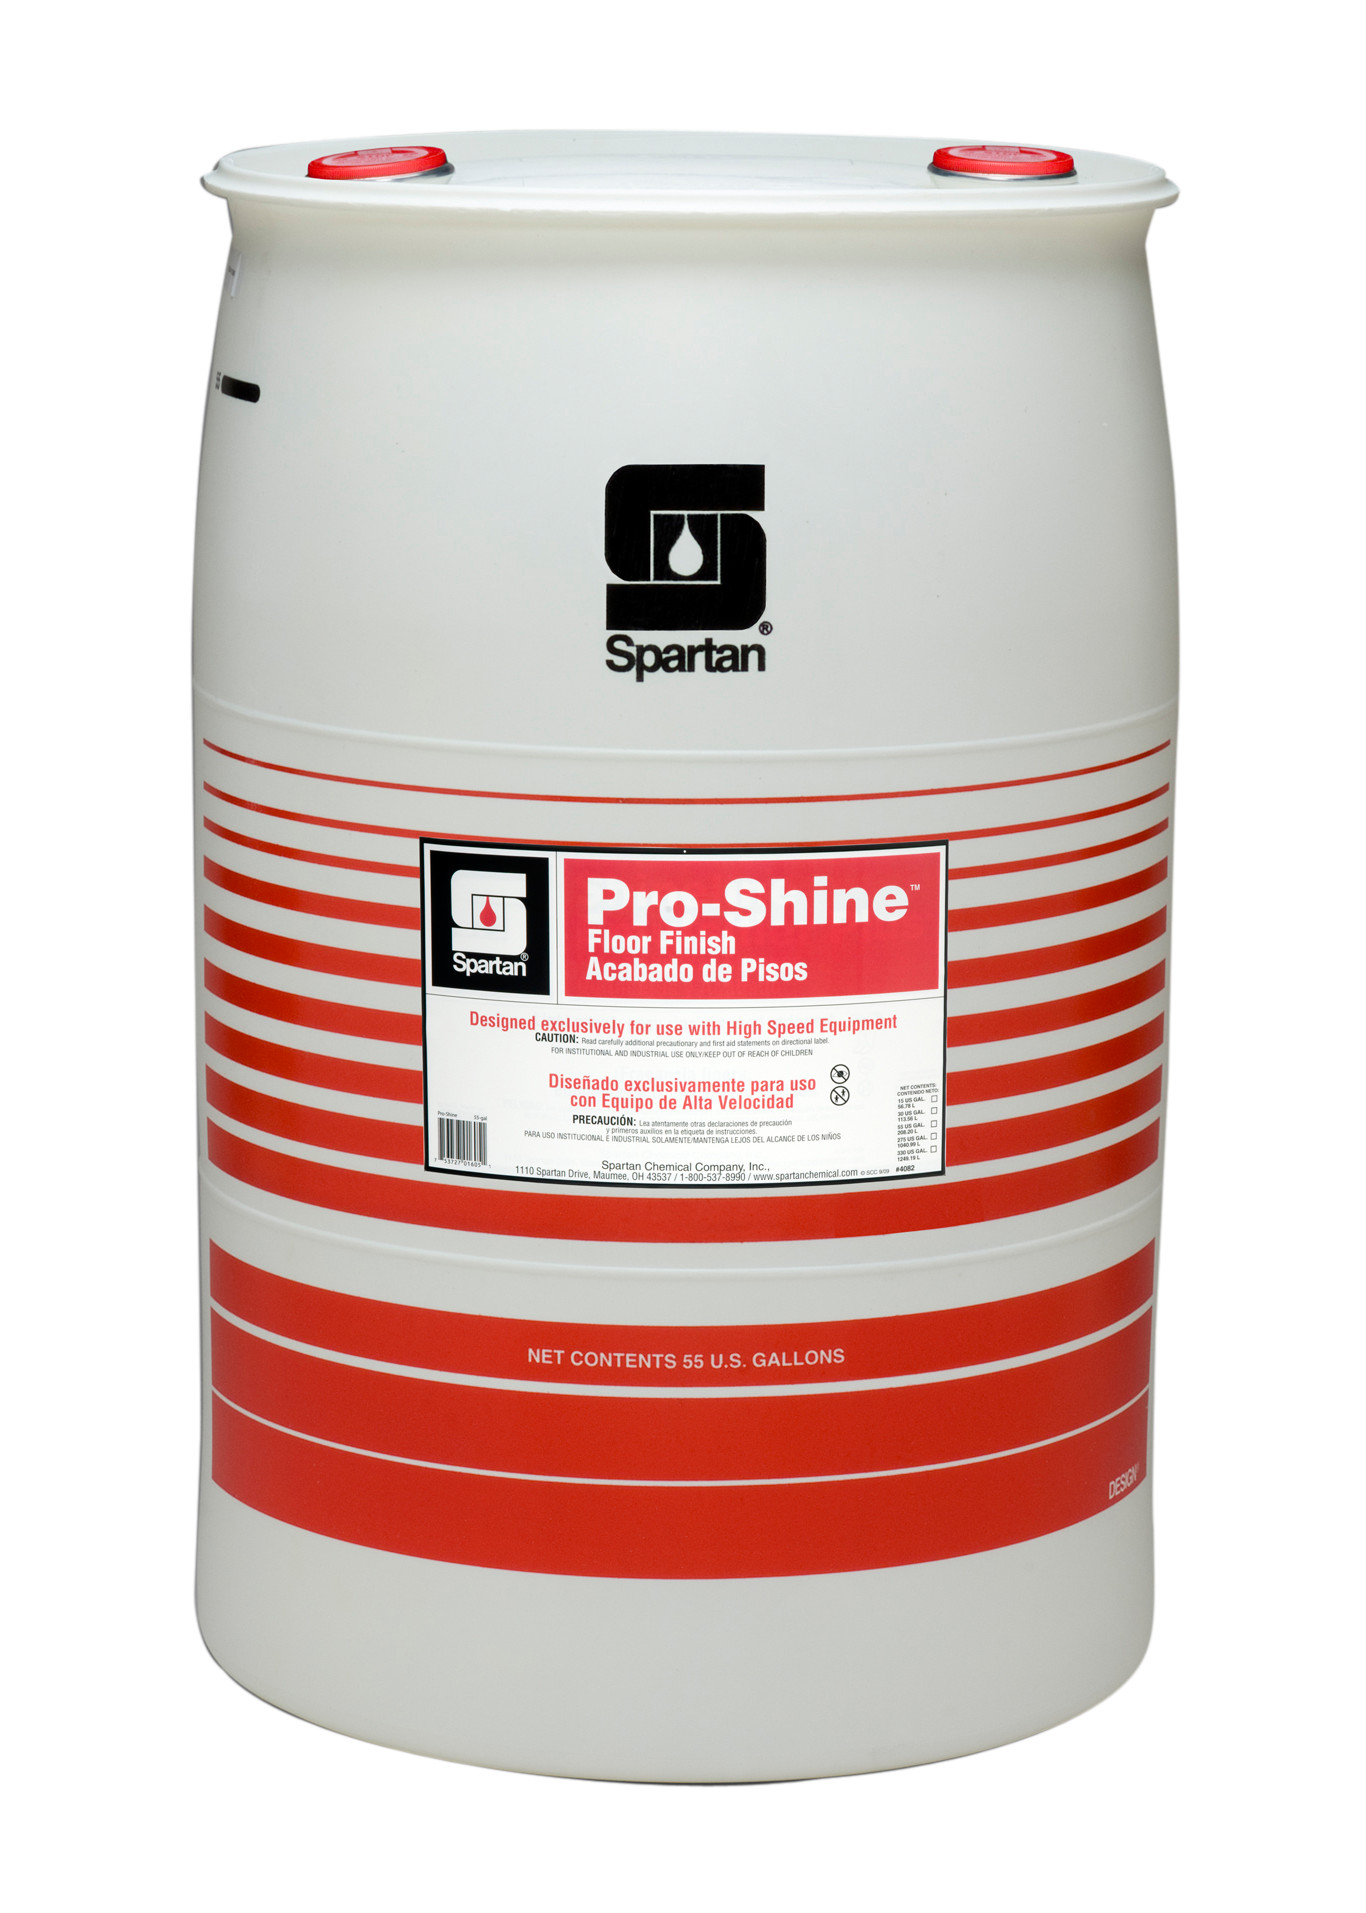 Spartan Chemical Company Pro-Shine, 55 GAL DRUM